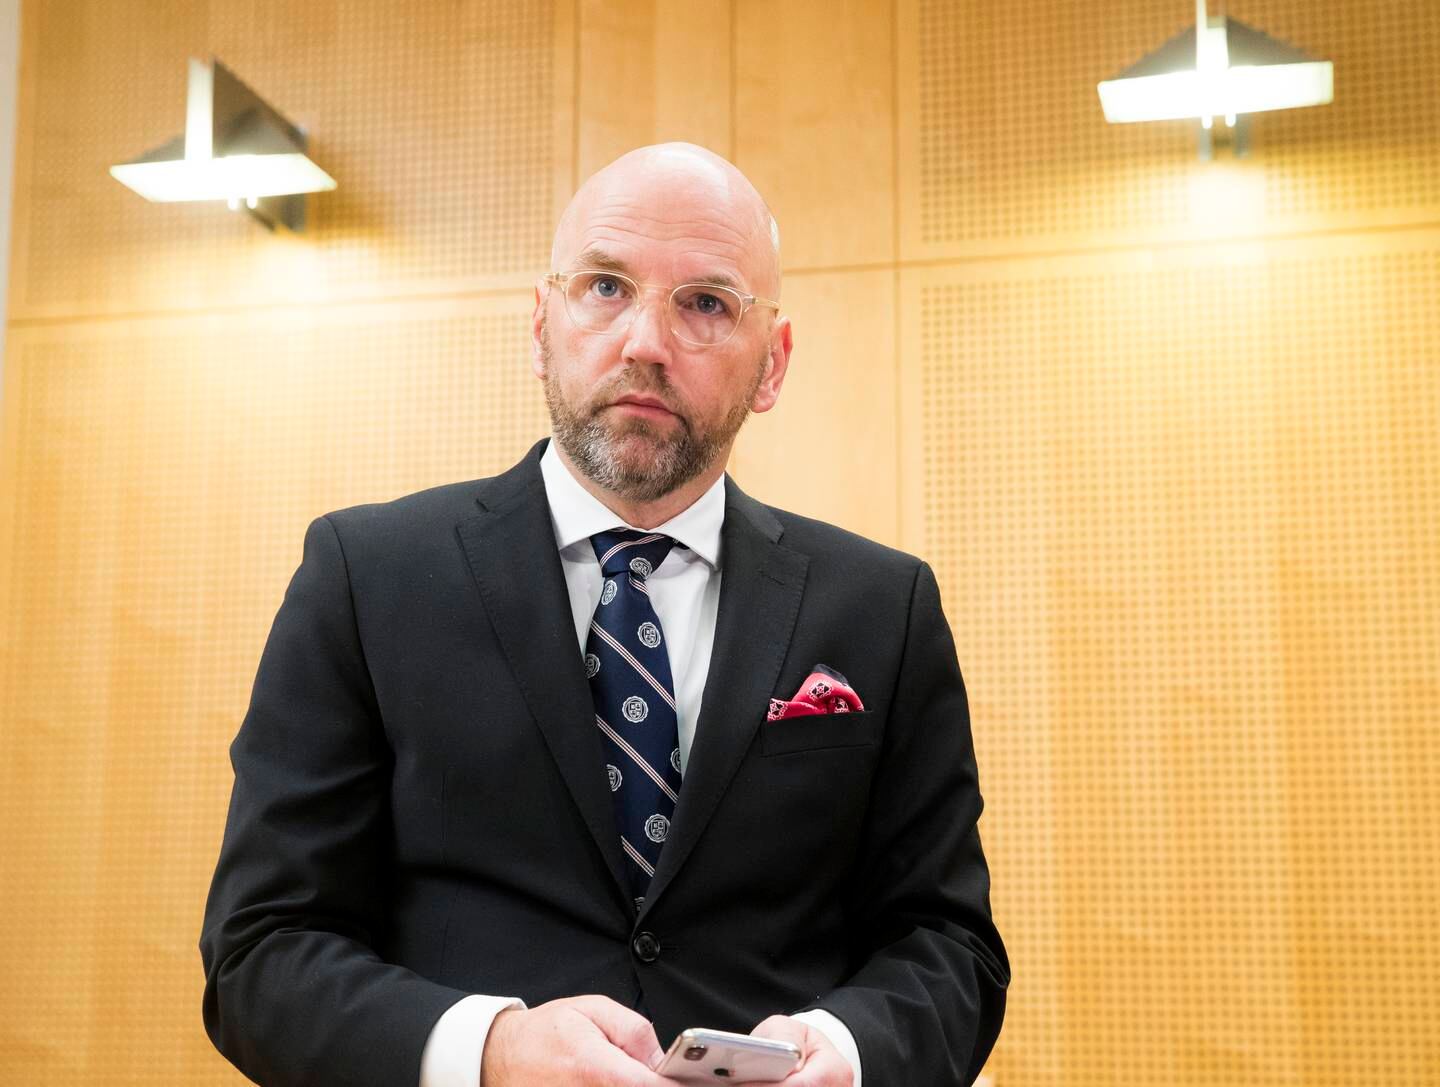 Forsvarsadvokat Brynjar Meling sier den 25 år gamle terrordømte mannen anker dommen med en gang.
Foto: Terje Pedersen / NTB